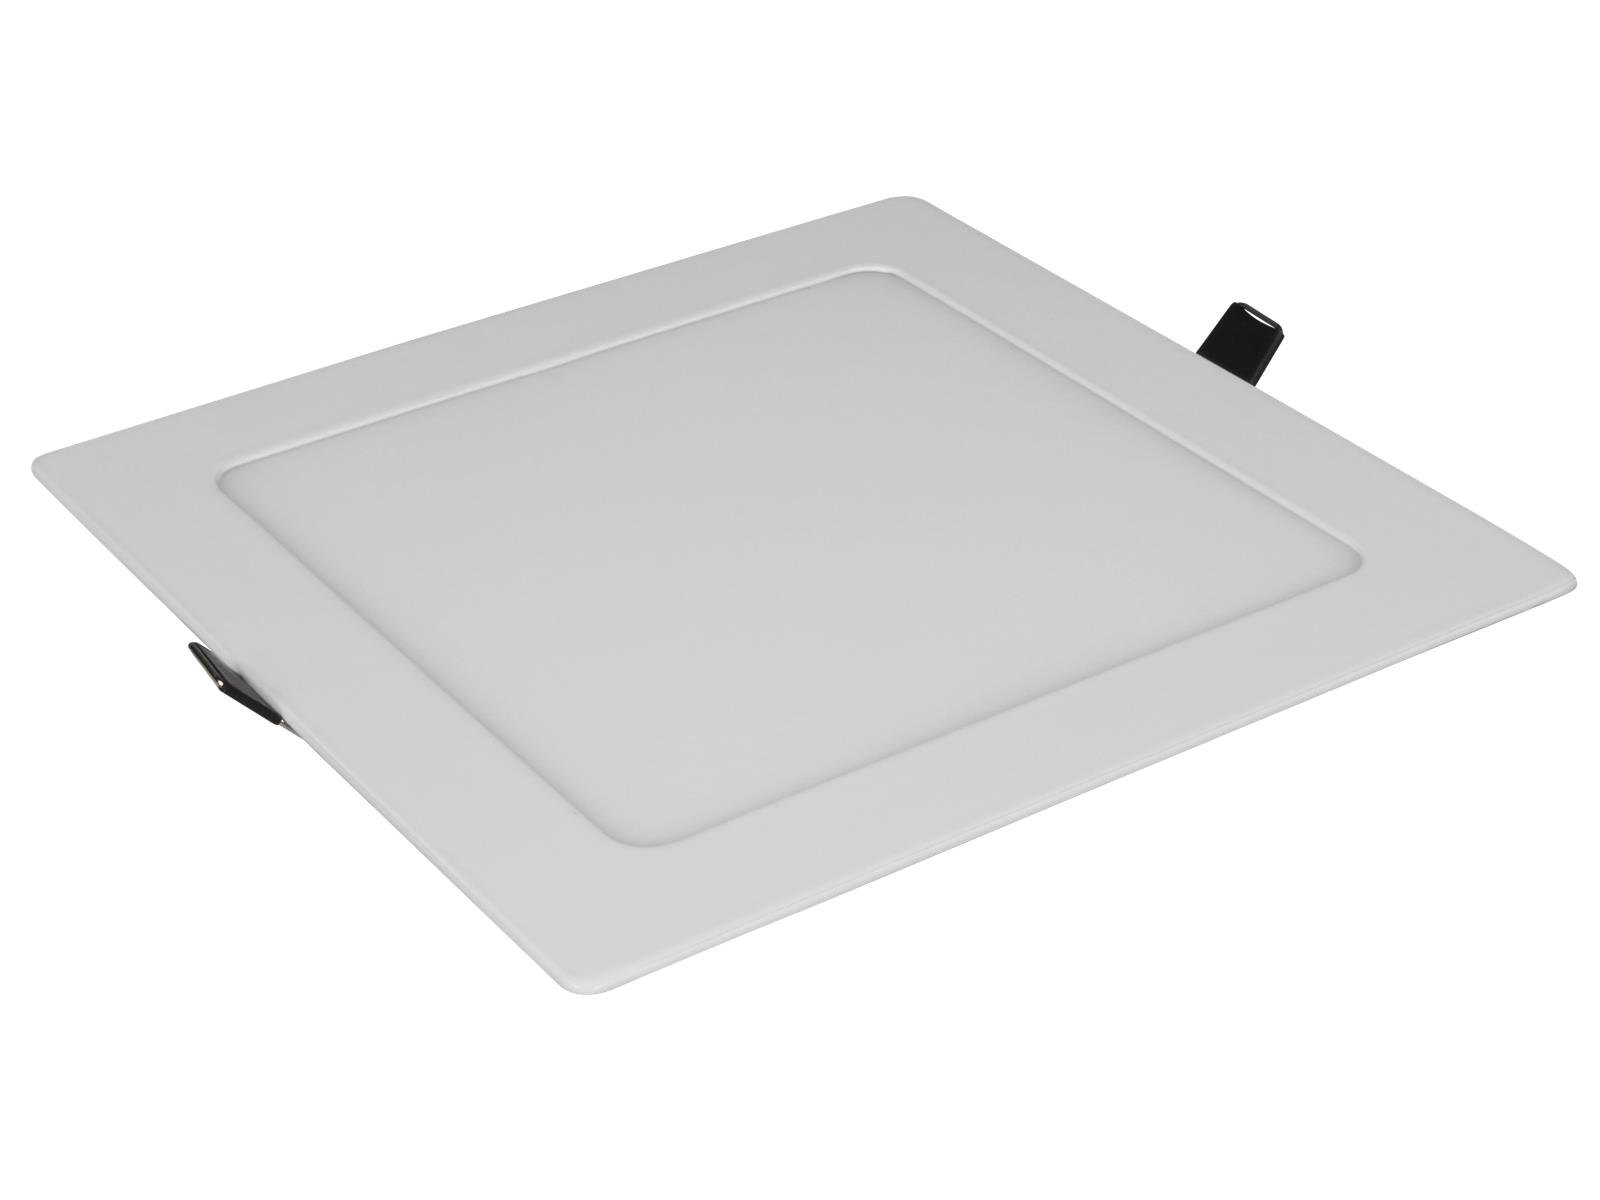 LED-Panel McShine ''LP-1519SW'', 15W, 200x200mm, 1530 lm, 3000K, warmweiß